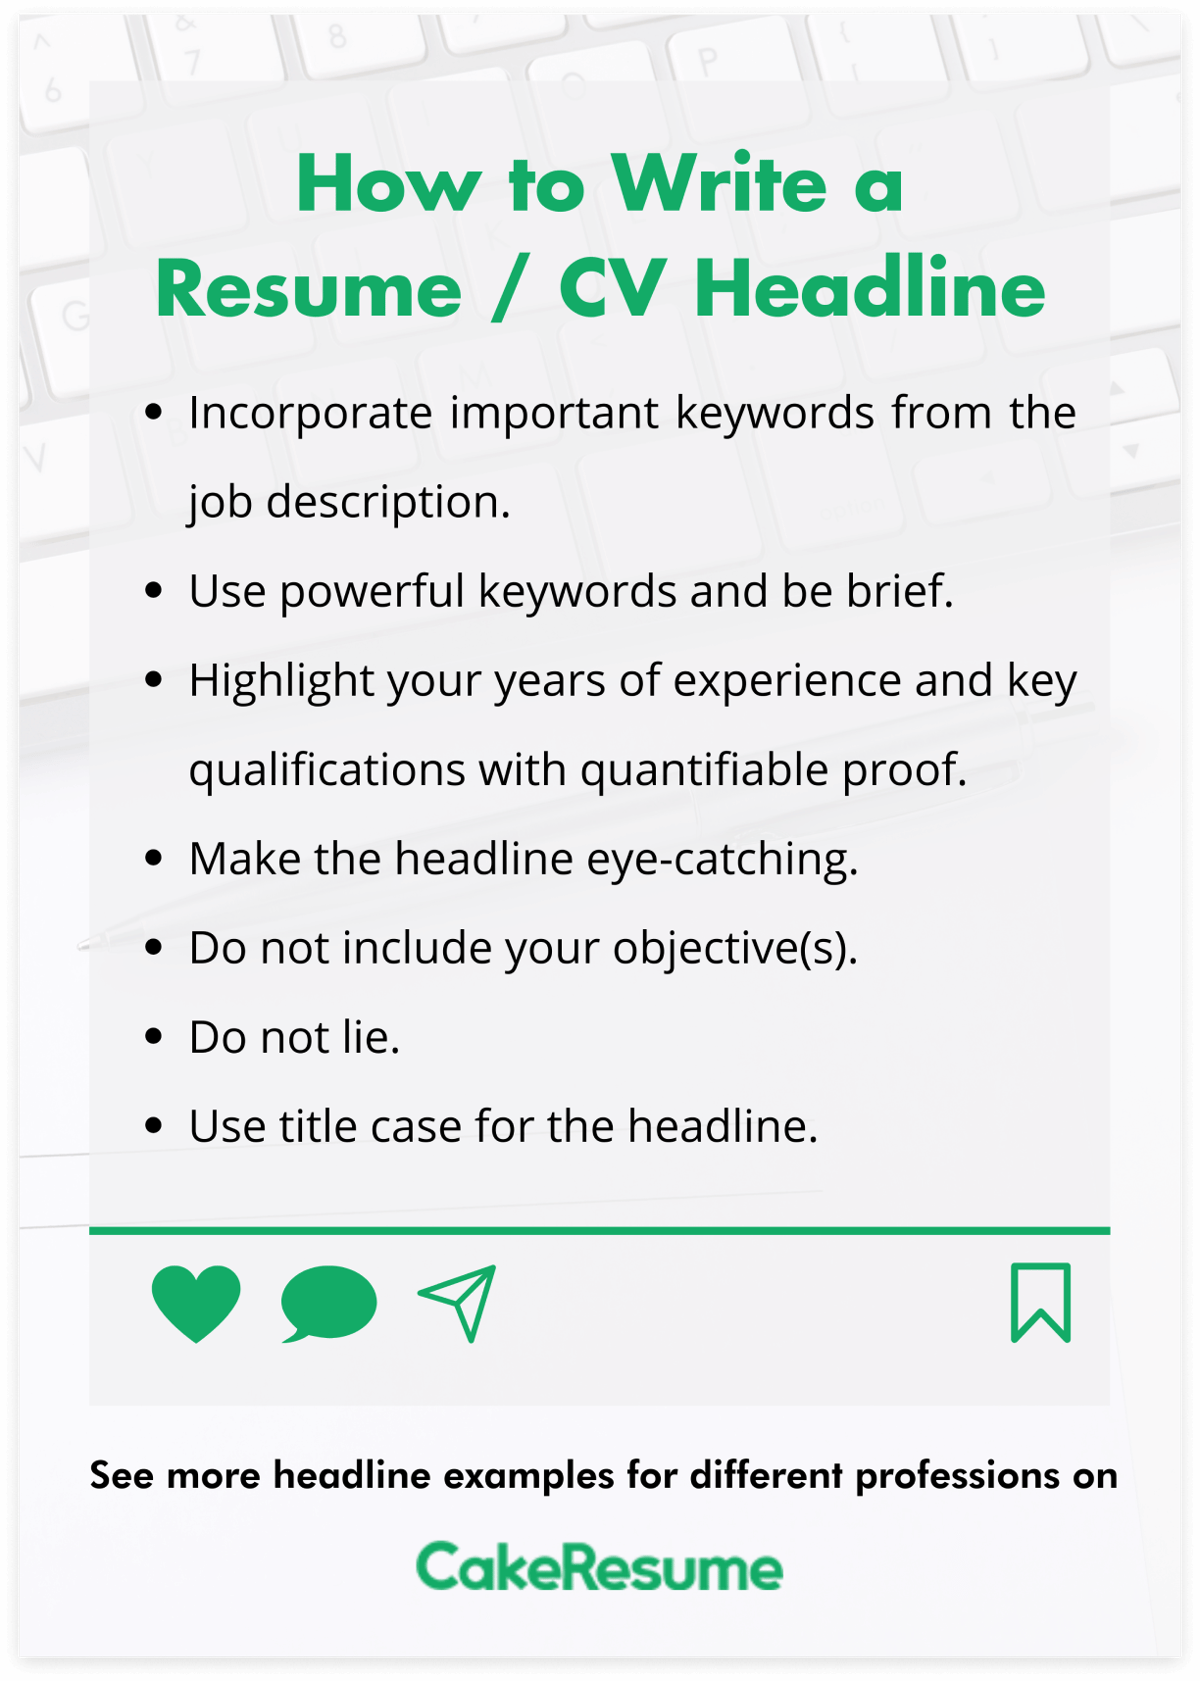 CV / Resume Headline